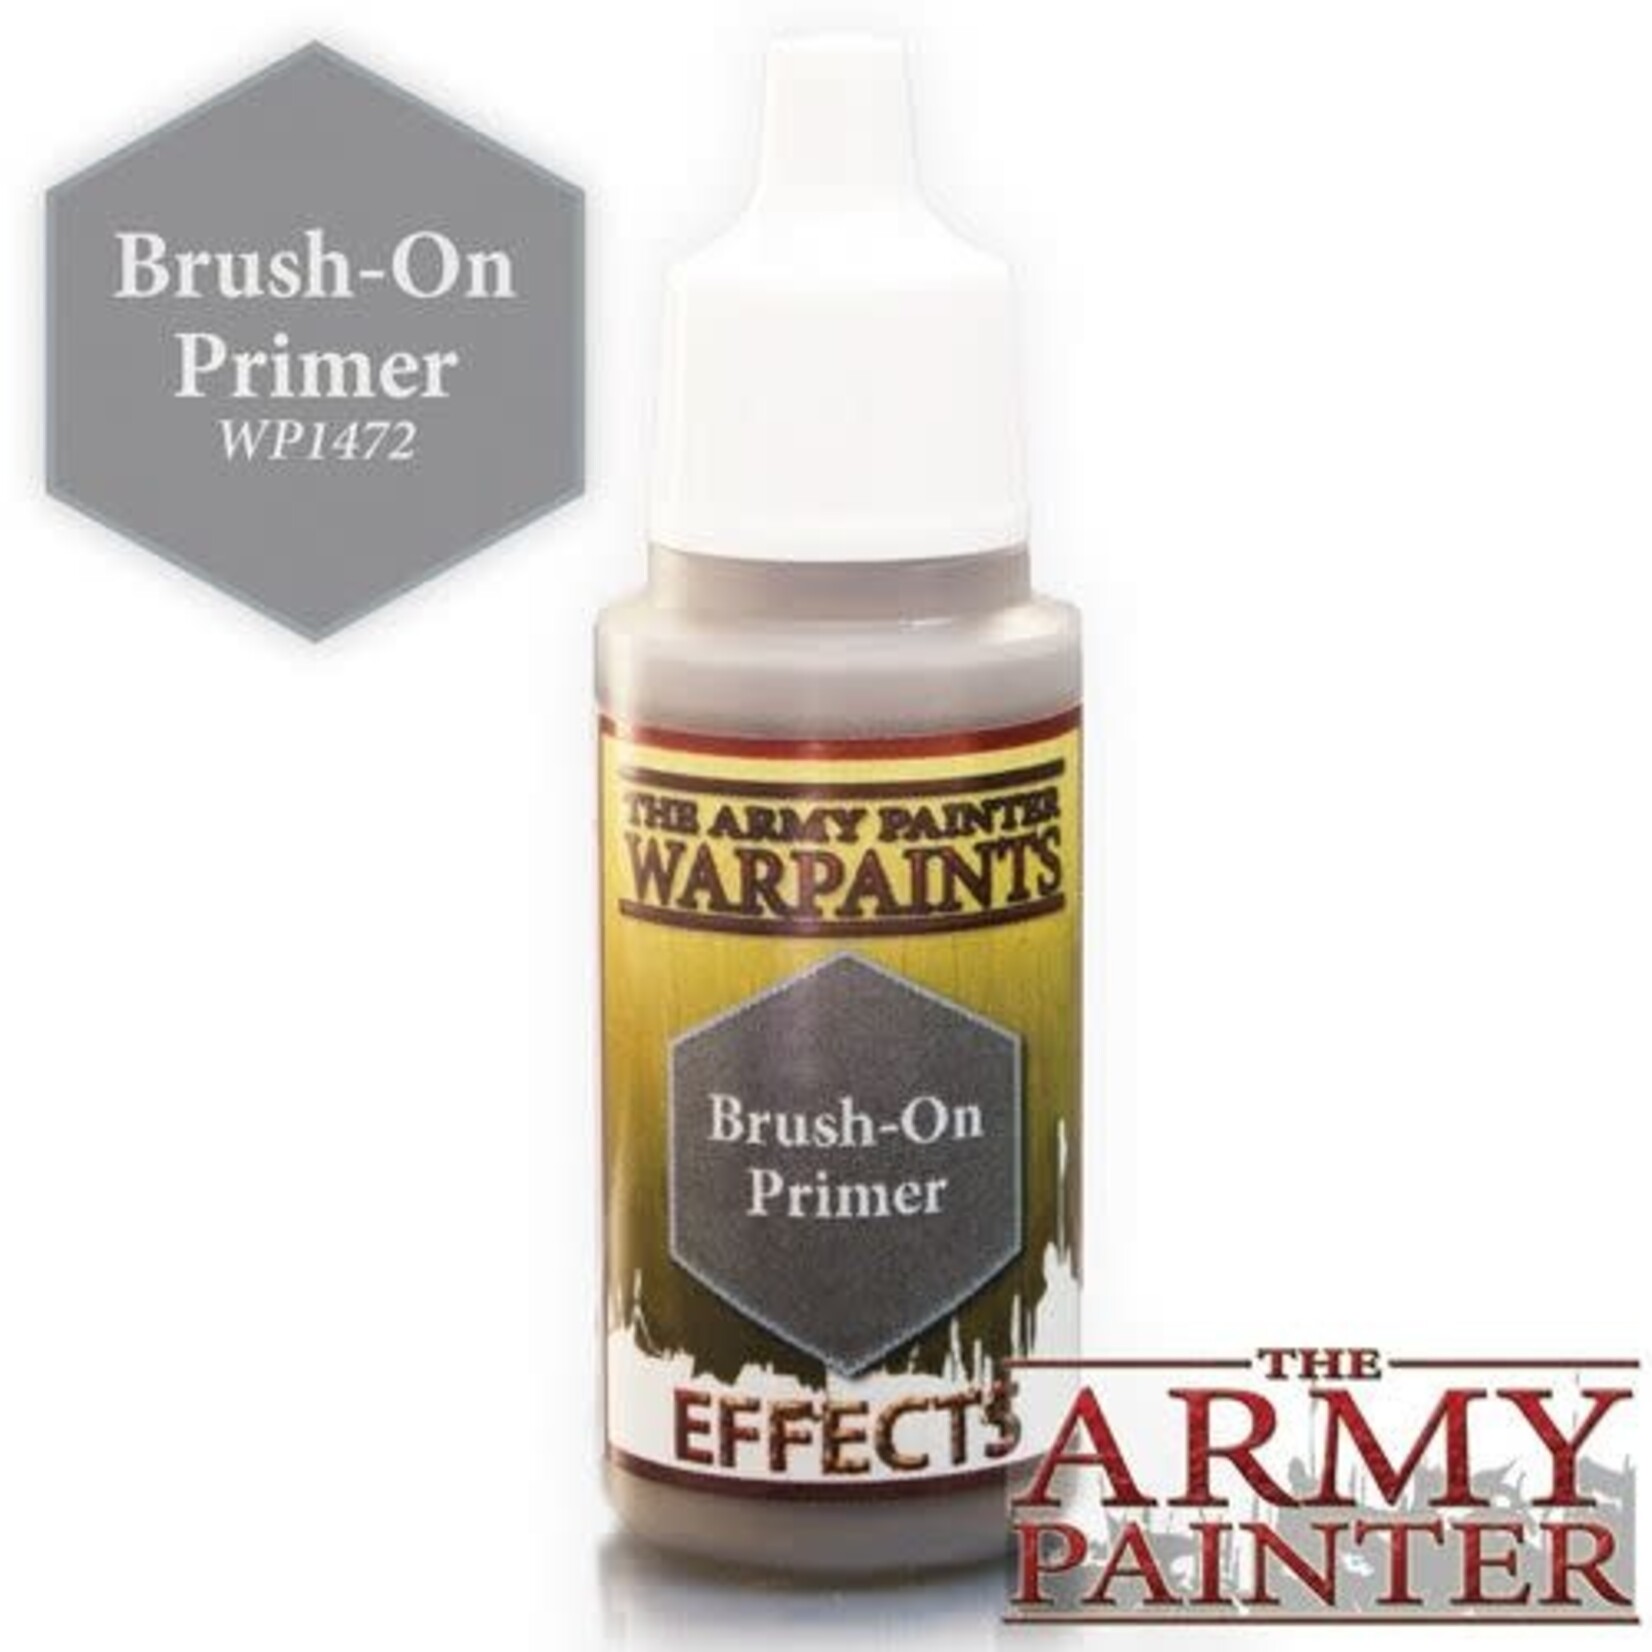 Army Painter Warpaints: Brush-on Primer 18ml